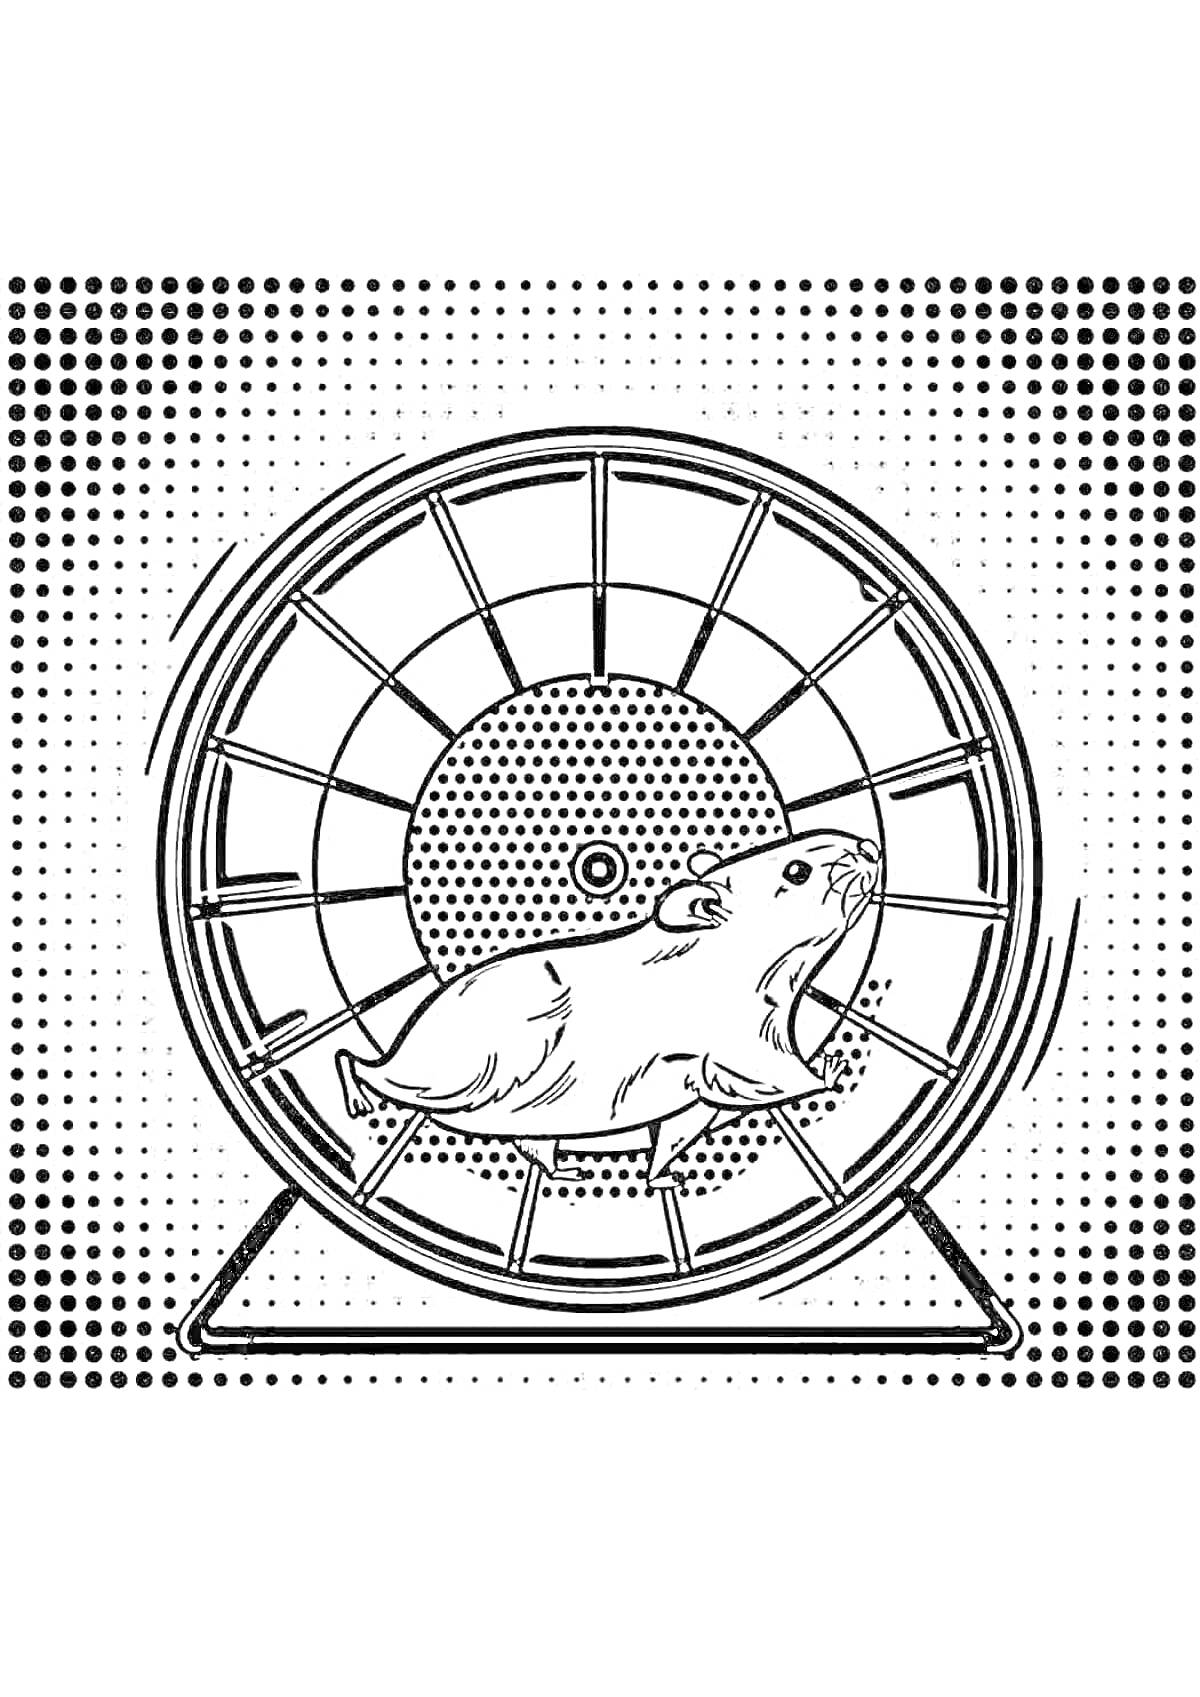 Раскраска Хомяк в колесе для бега внутри клетки